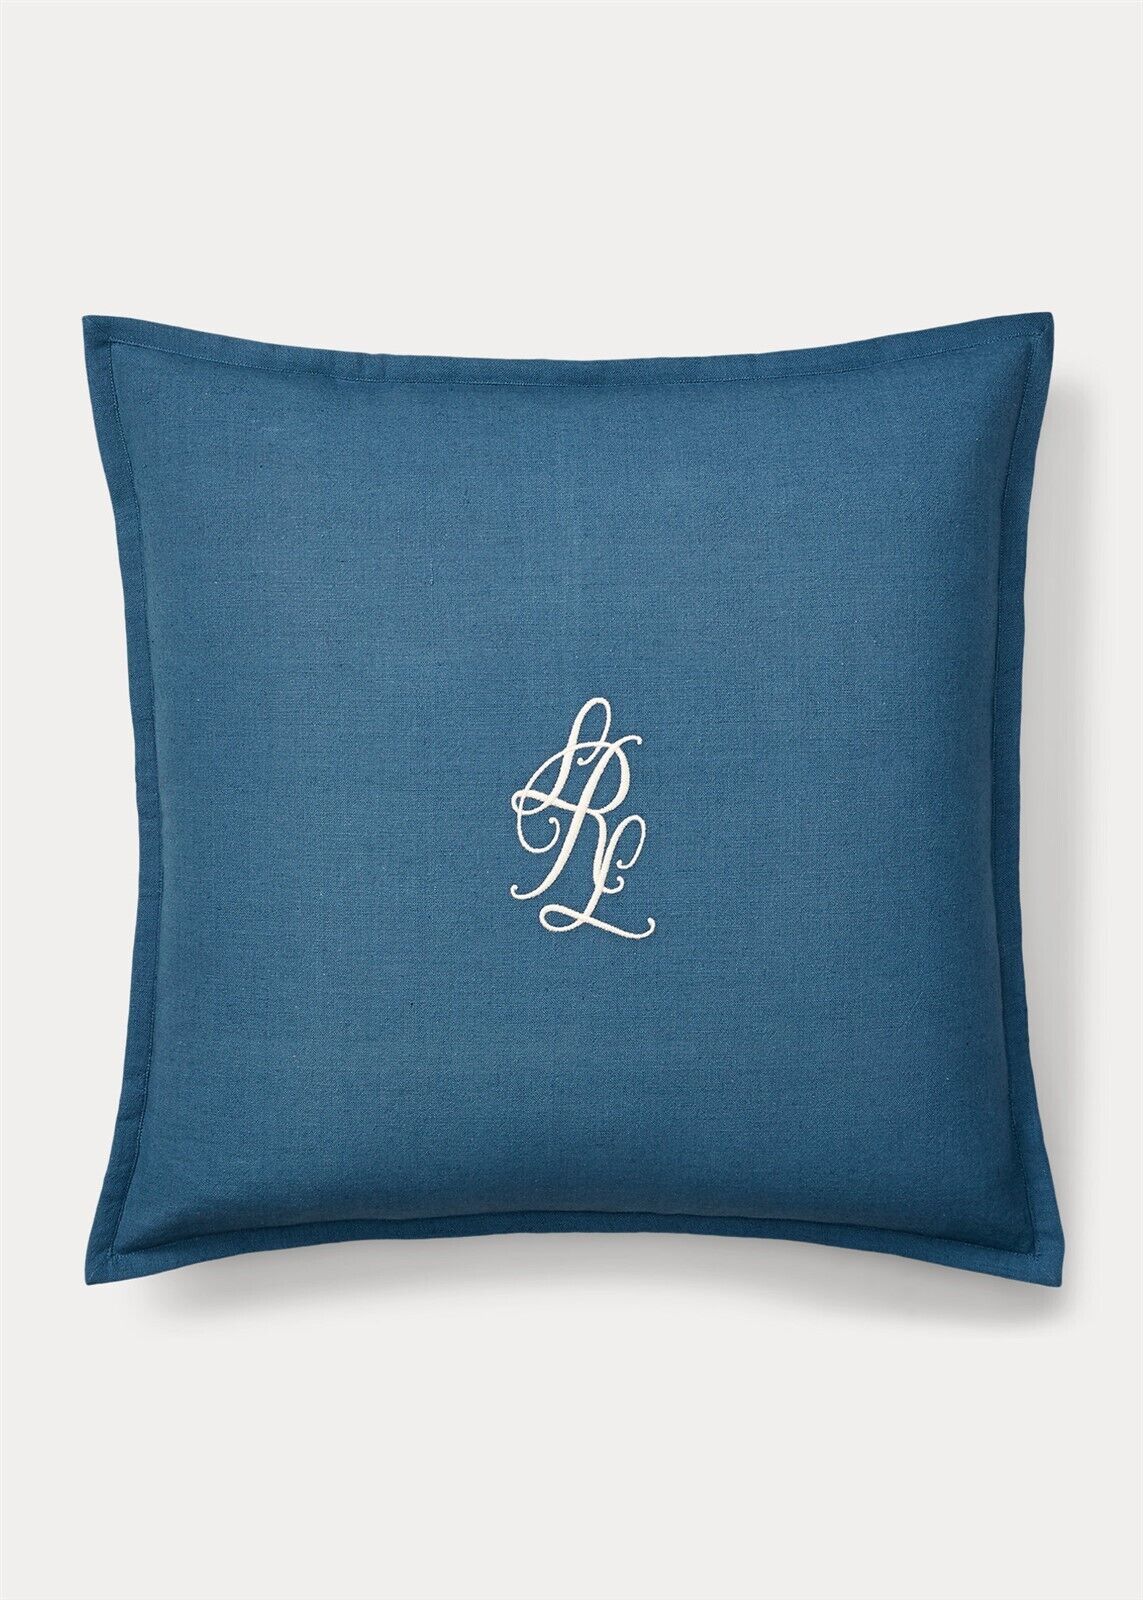 Primary image for Ralph Lauren Julianne Monogram Deco Pillow $135